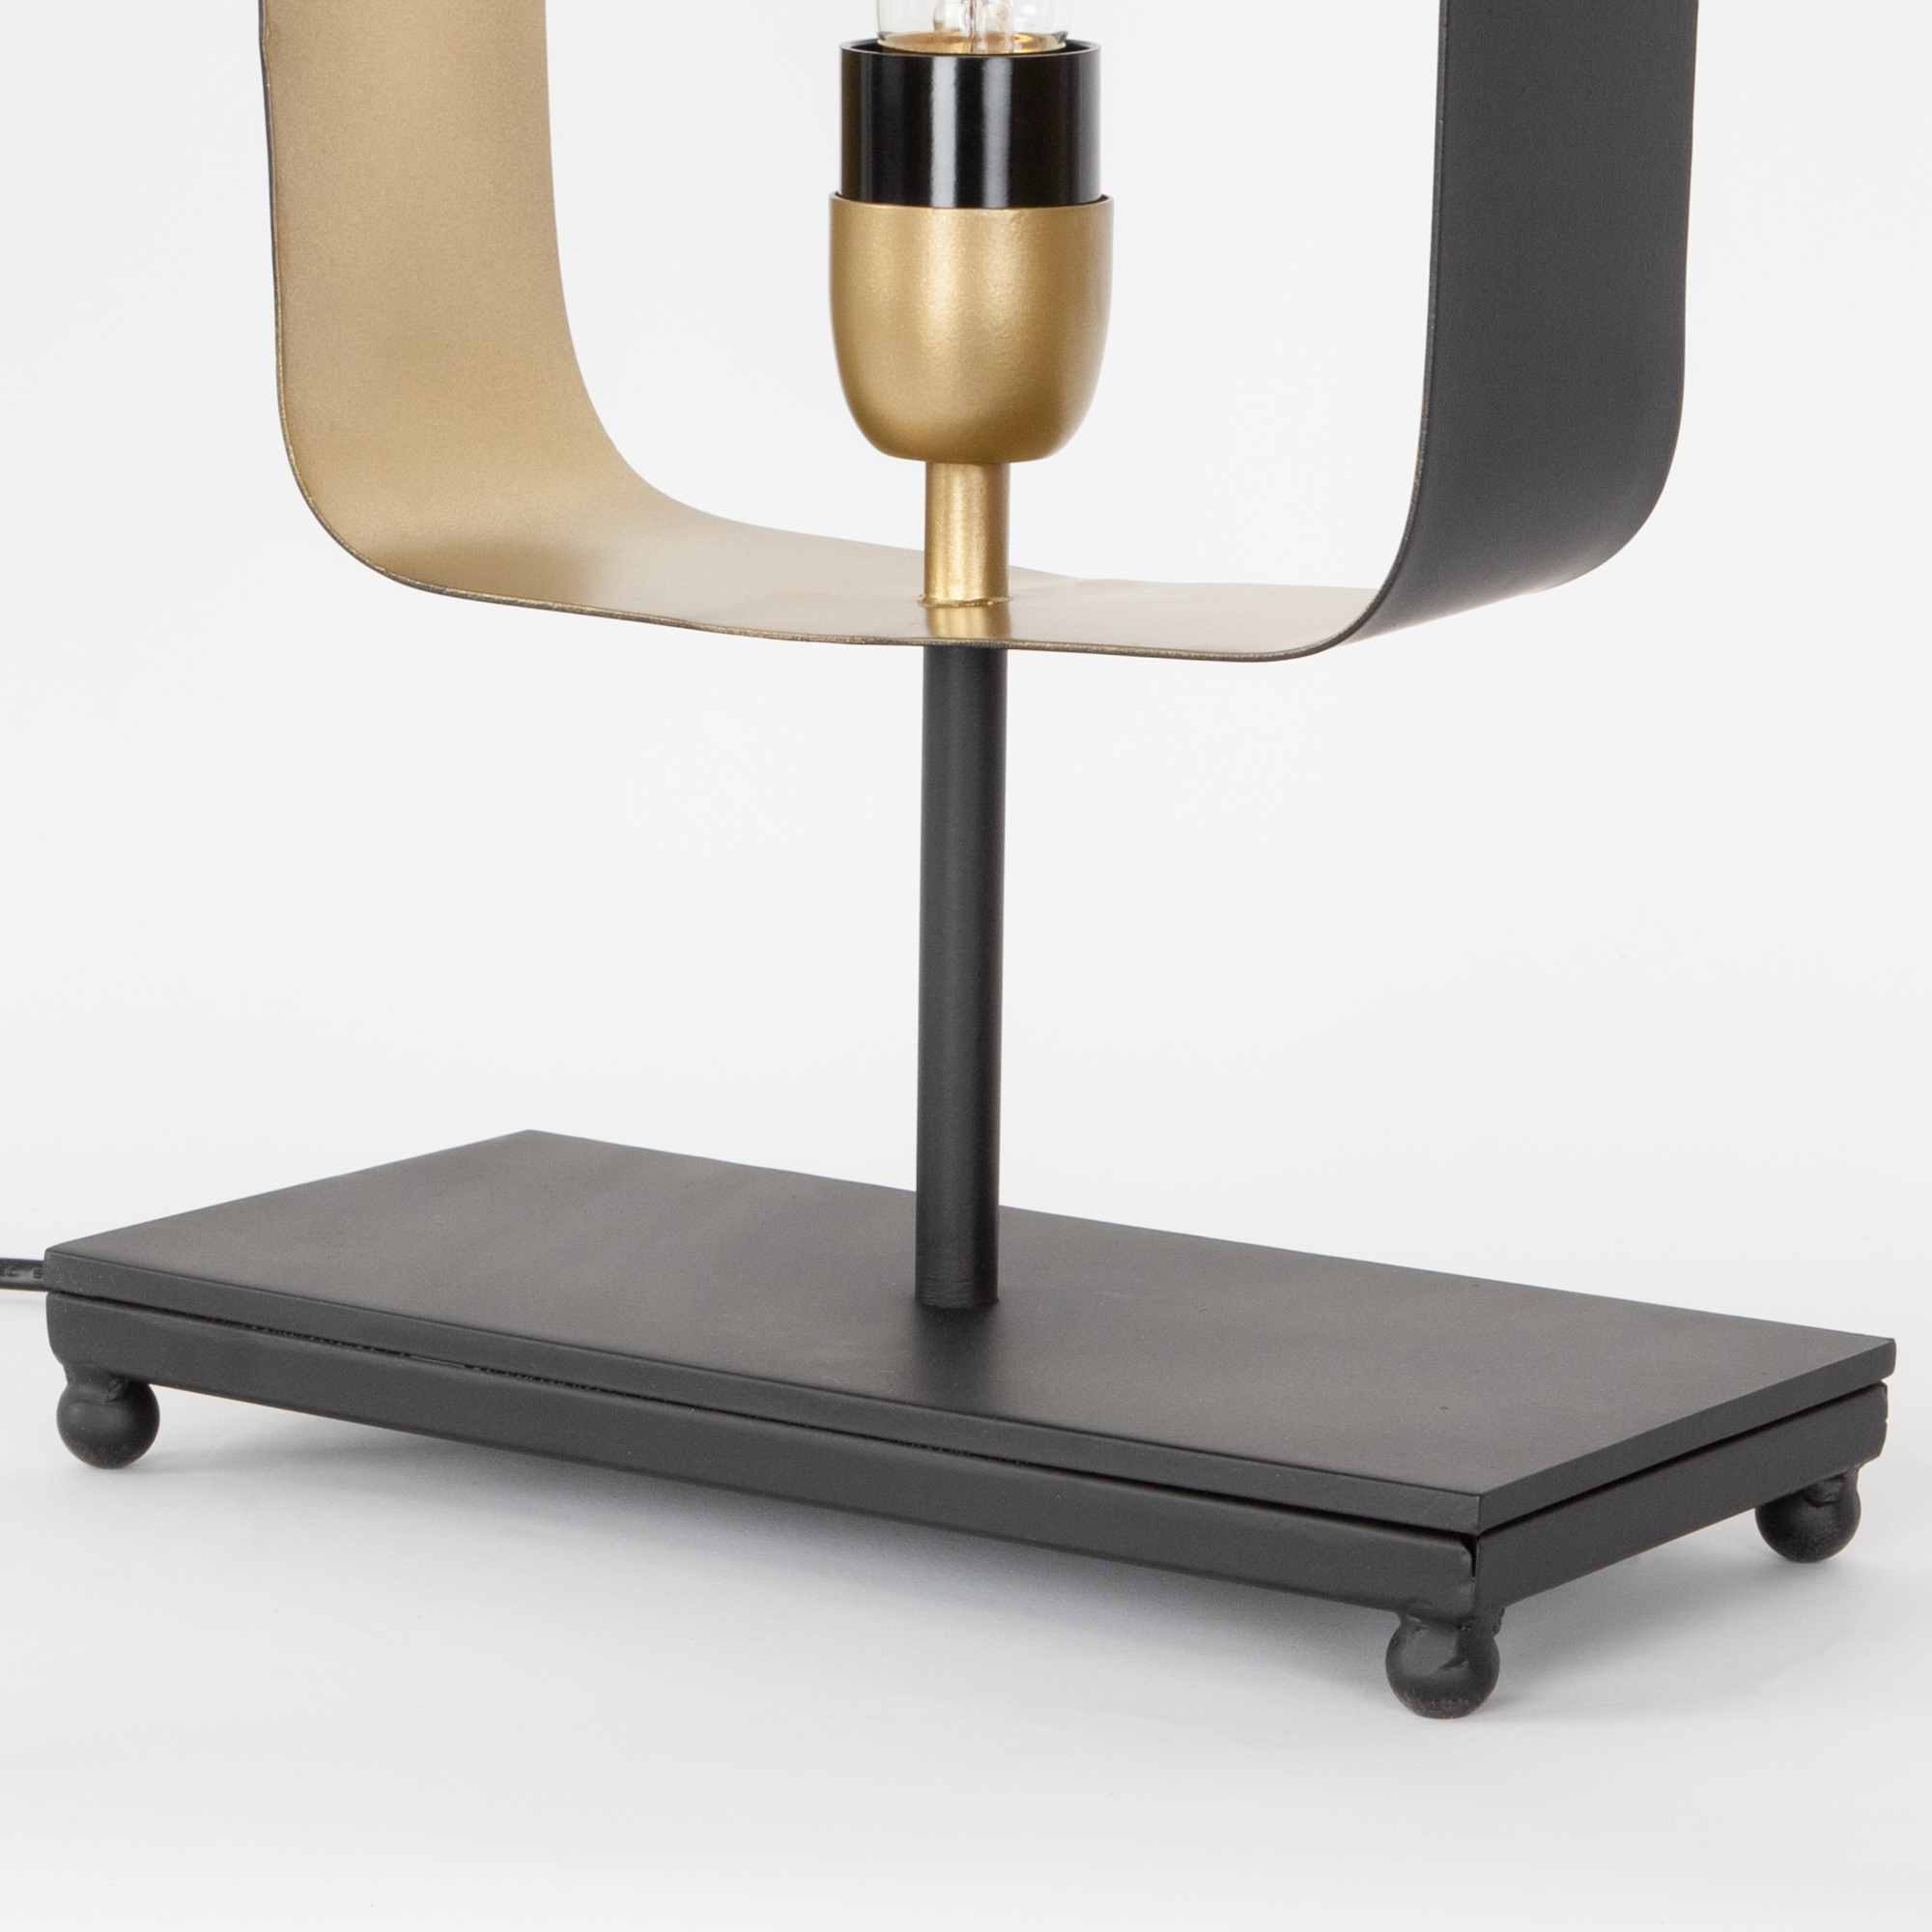 Soho Rectangular Table Lamp- Black and Antique Brass